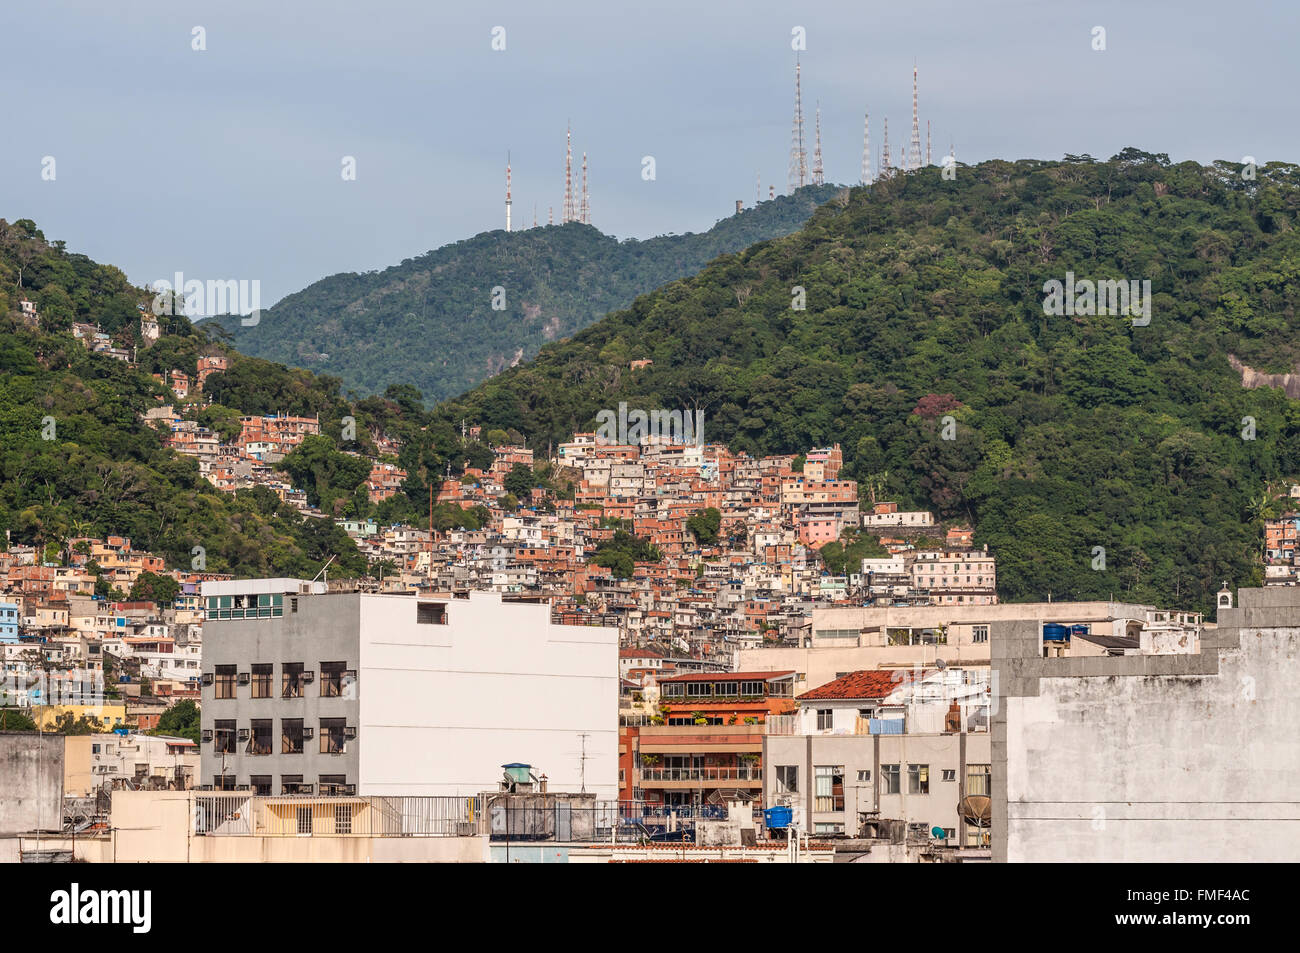 The favelas of Rio de Janeiro, Brazil Stock Photo